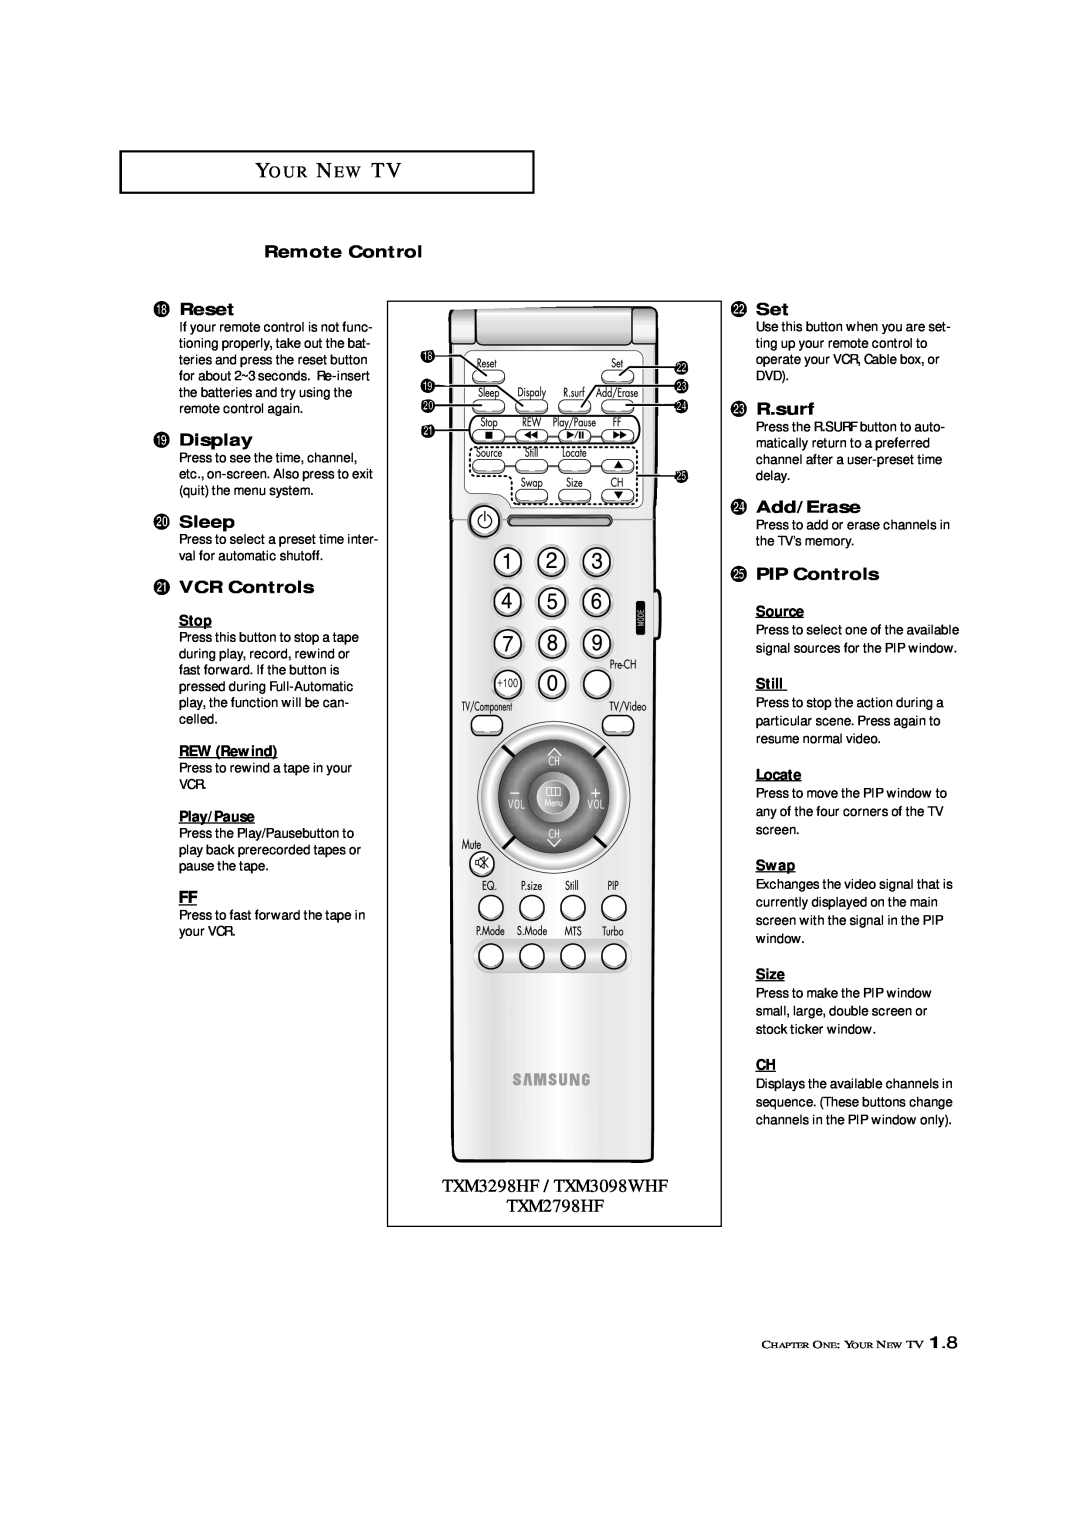 Samsung TXM 3098WHF Y O U R N E W T, Remote Control ¯ Reset, ˘ Display, ¿ Sleep, ¸ VCR Controls, ˛ Set, R.surf, Stop, Swap 